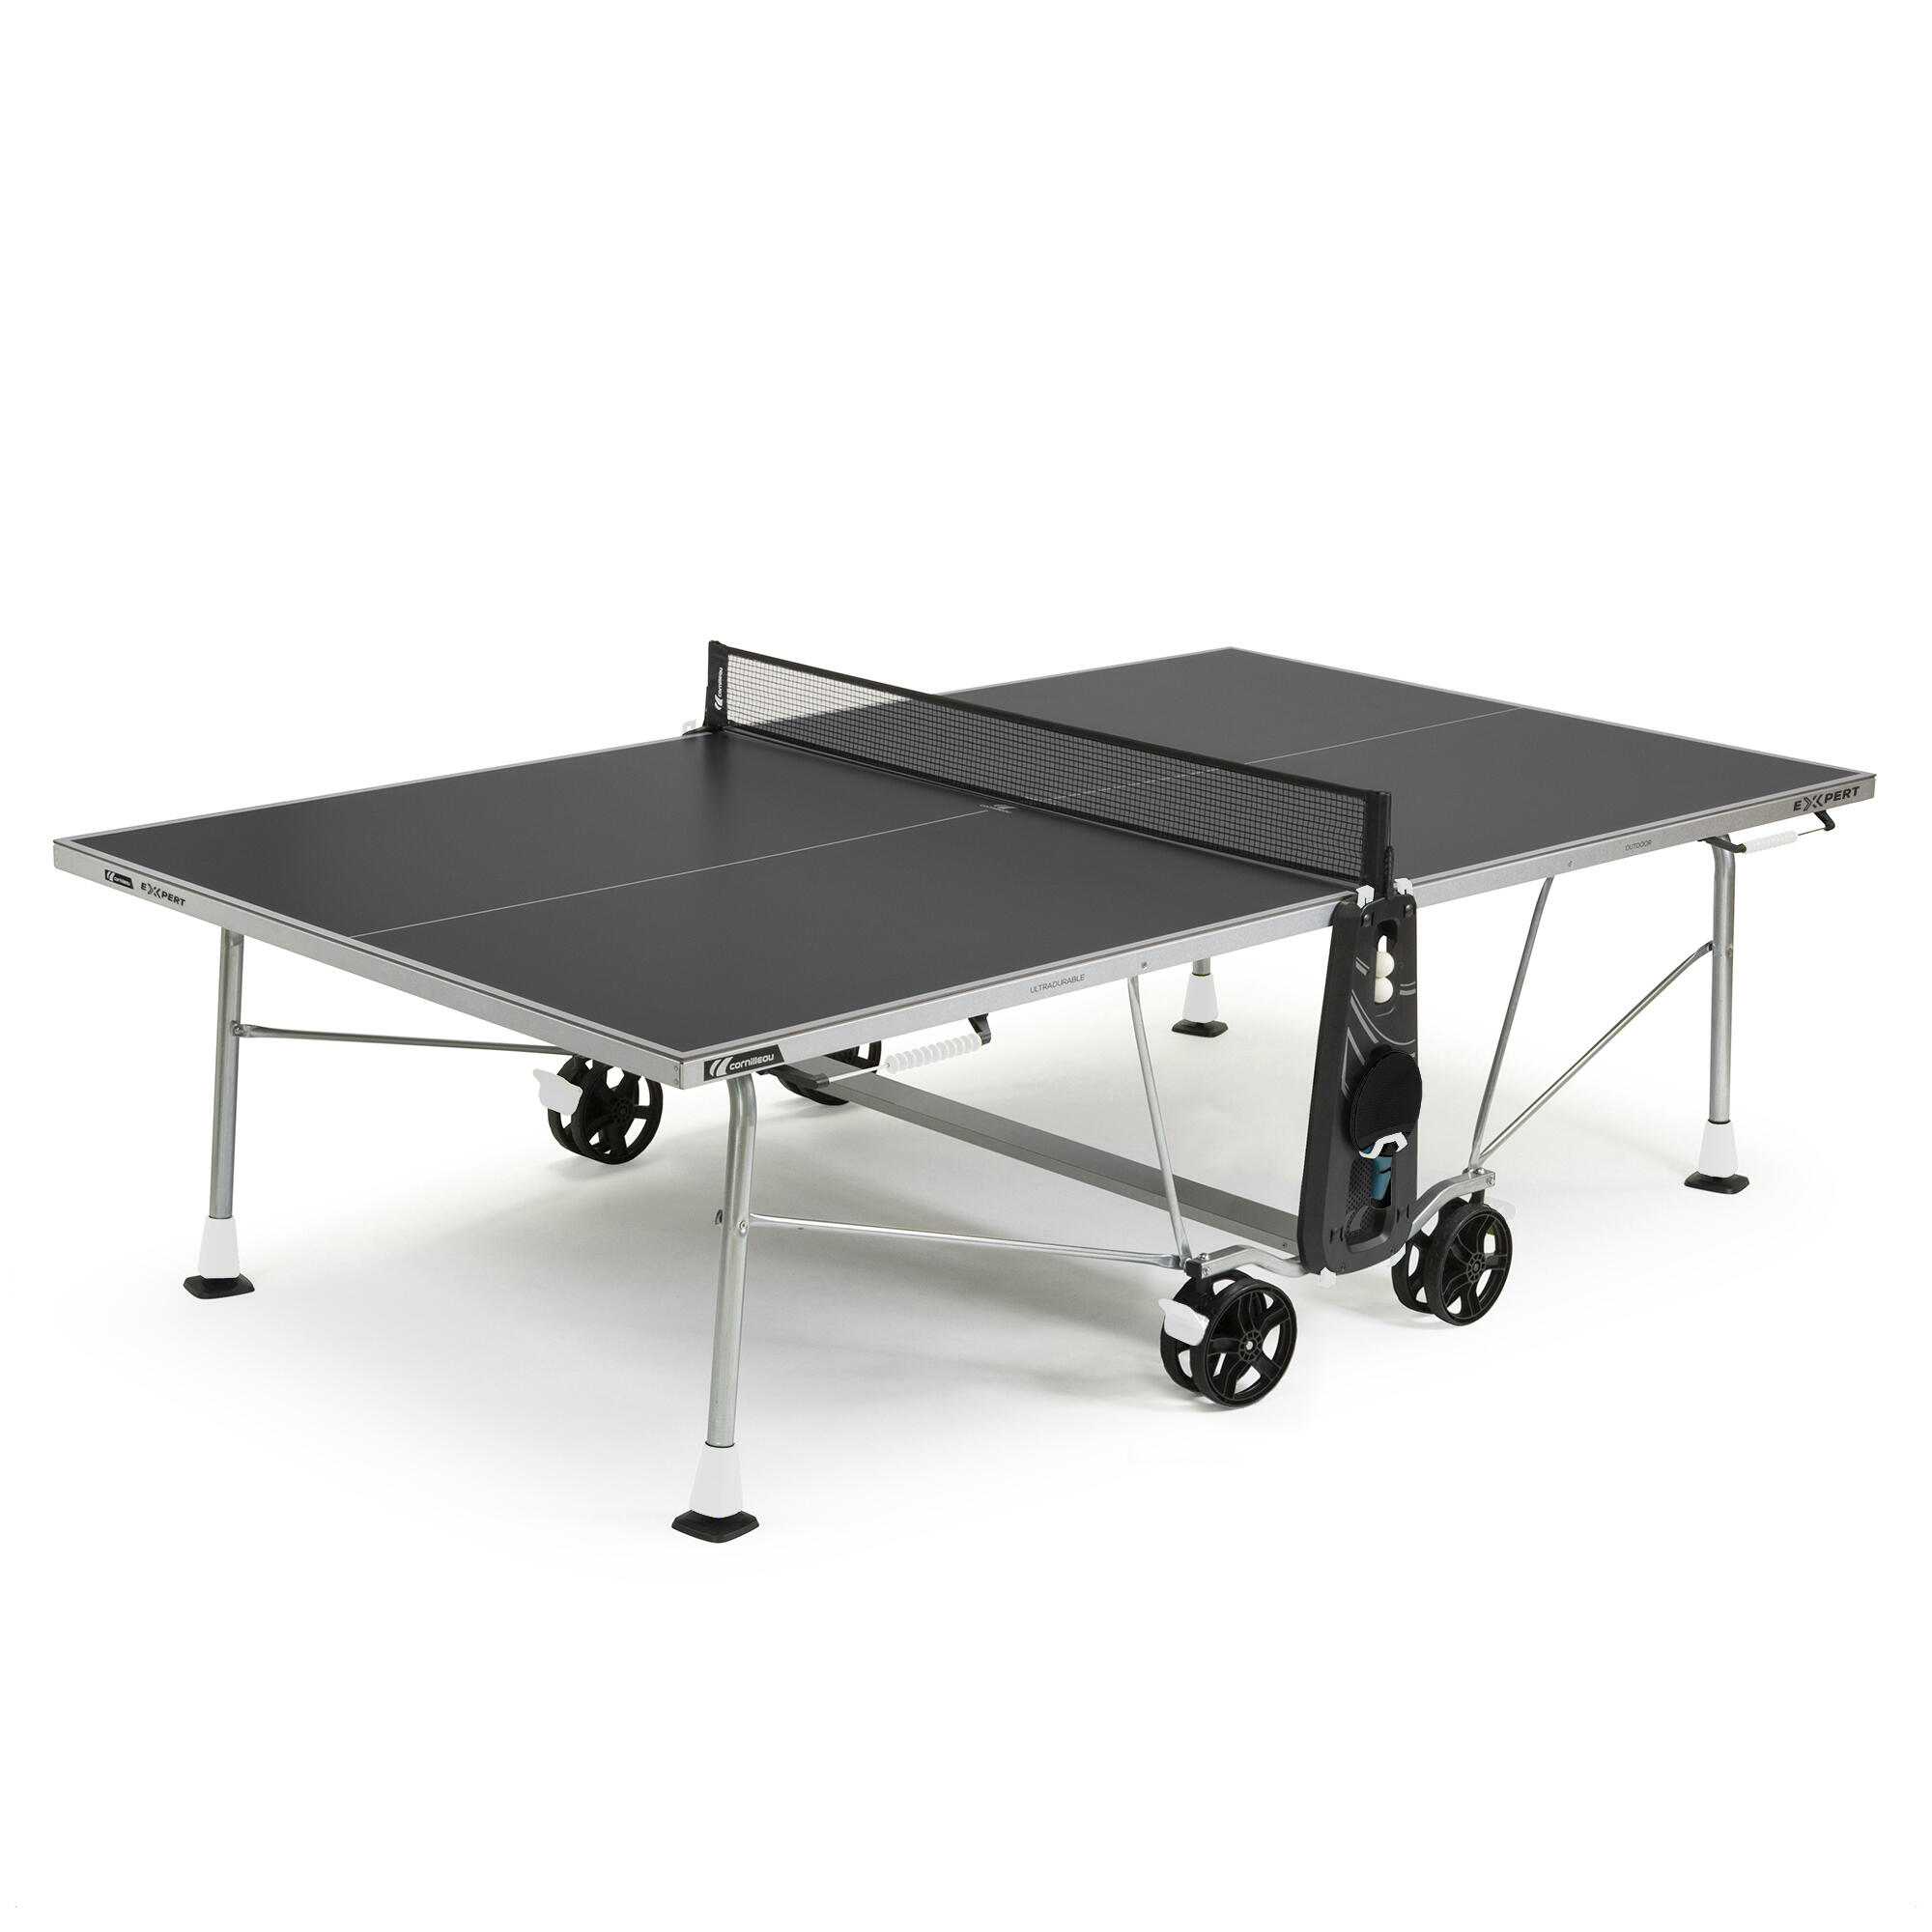 Cornilleau Recreational Table Tennis Advanced Outdoor - Grey